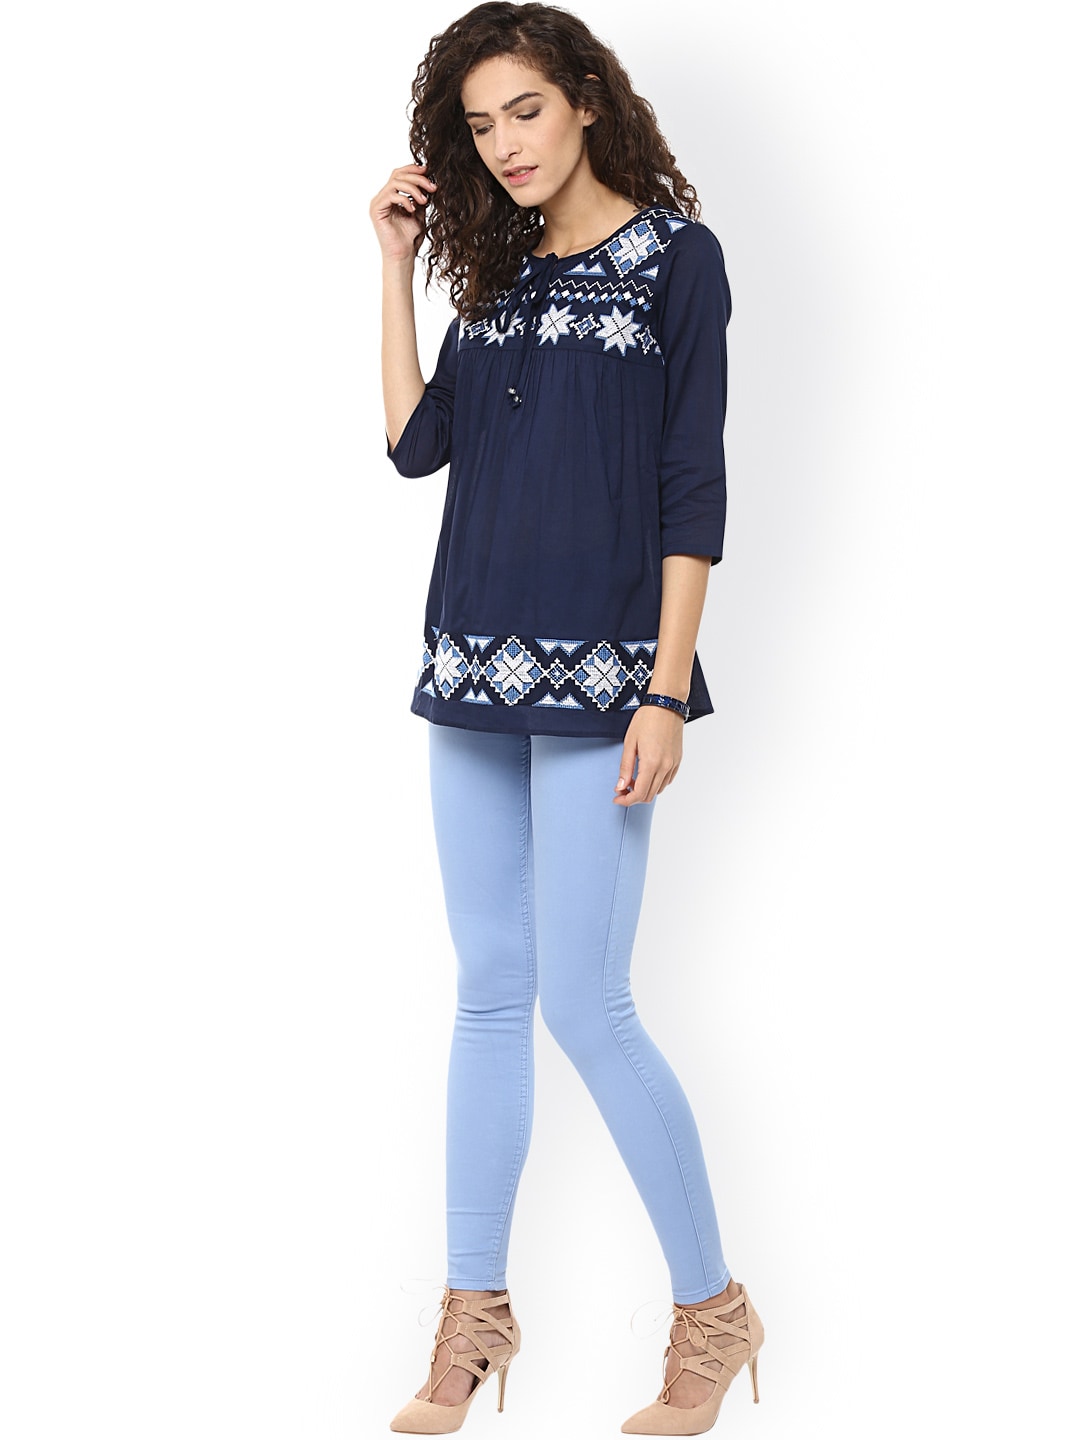 Ladies Tops - Buy Tops & Tshirts for Women Online in India - Myntra